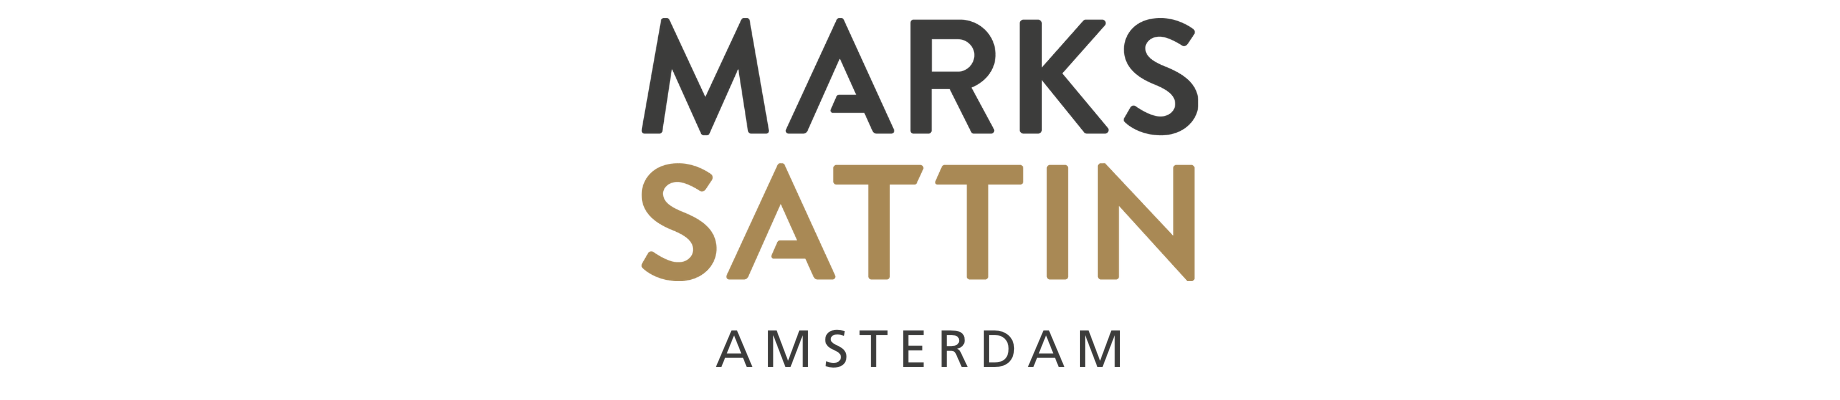 Amsterdam recruitment 